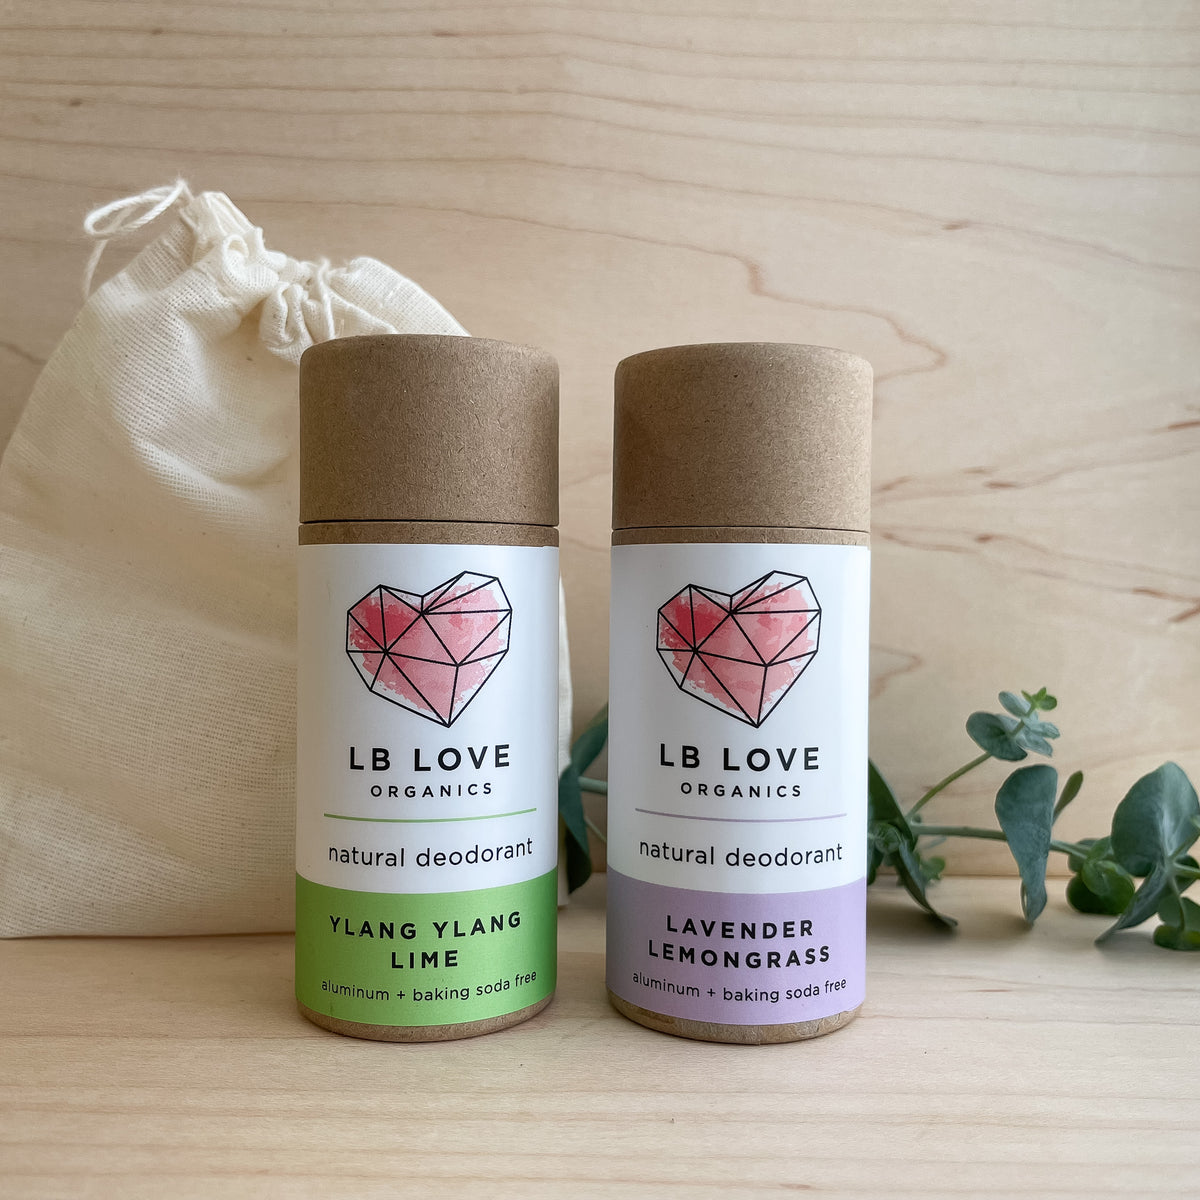 LB Love Organics zero waste deodorant duo compostable packaging organic magnesium deodorant for sensitive skin Ylang Ylang Lime and Lavender Lemongrass scents